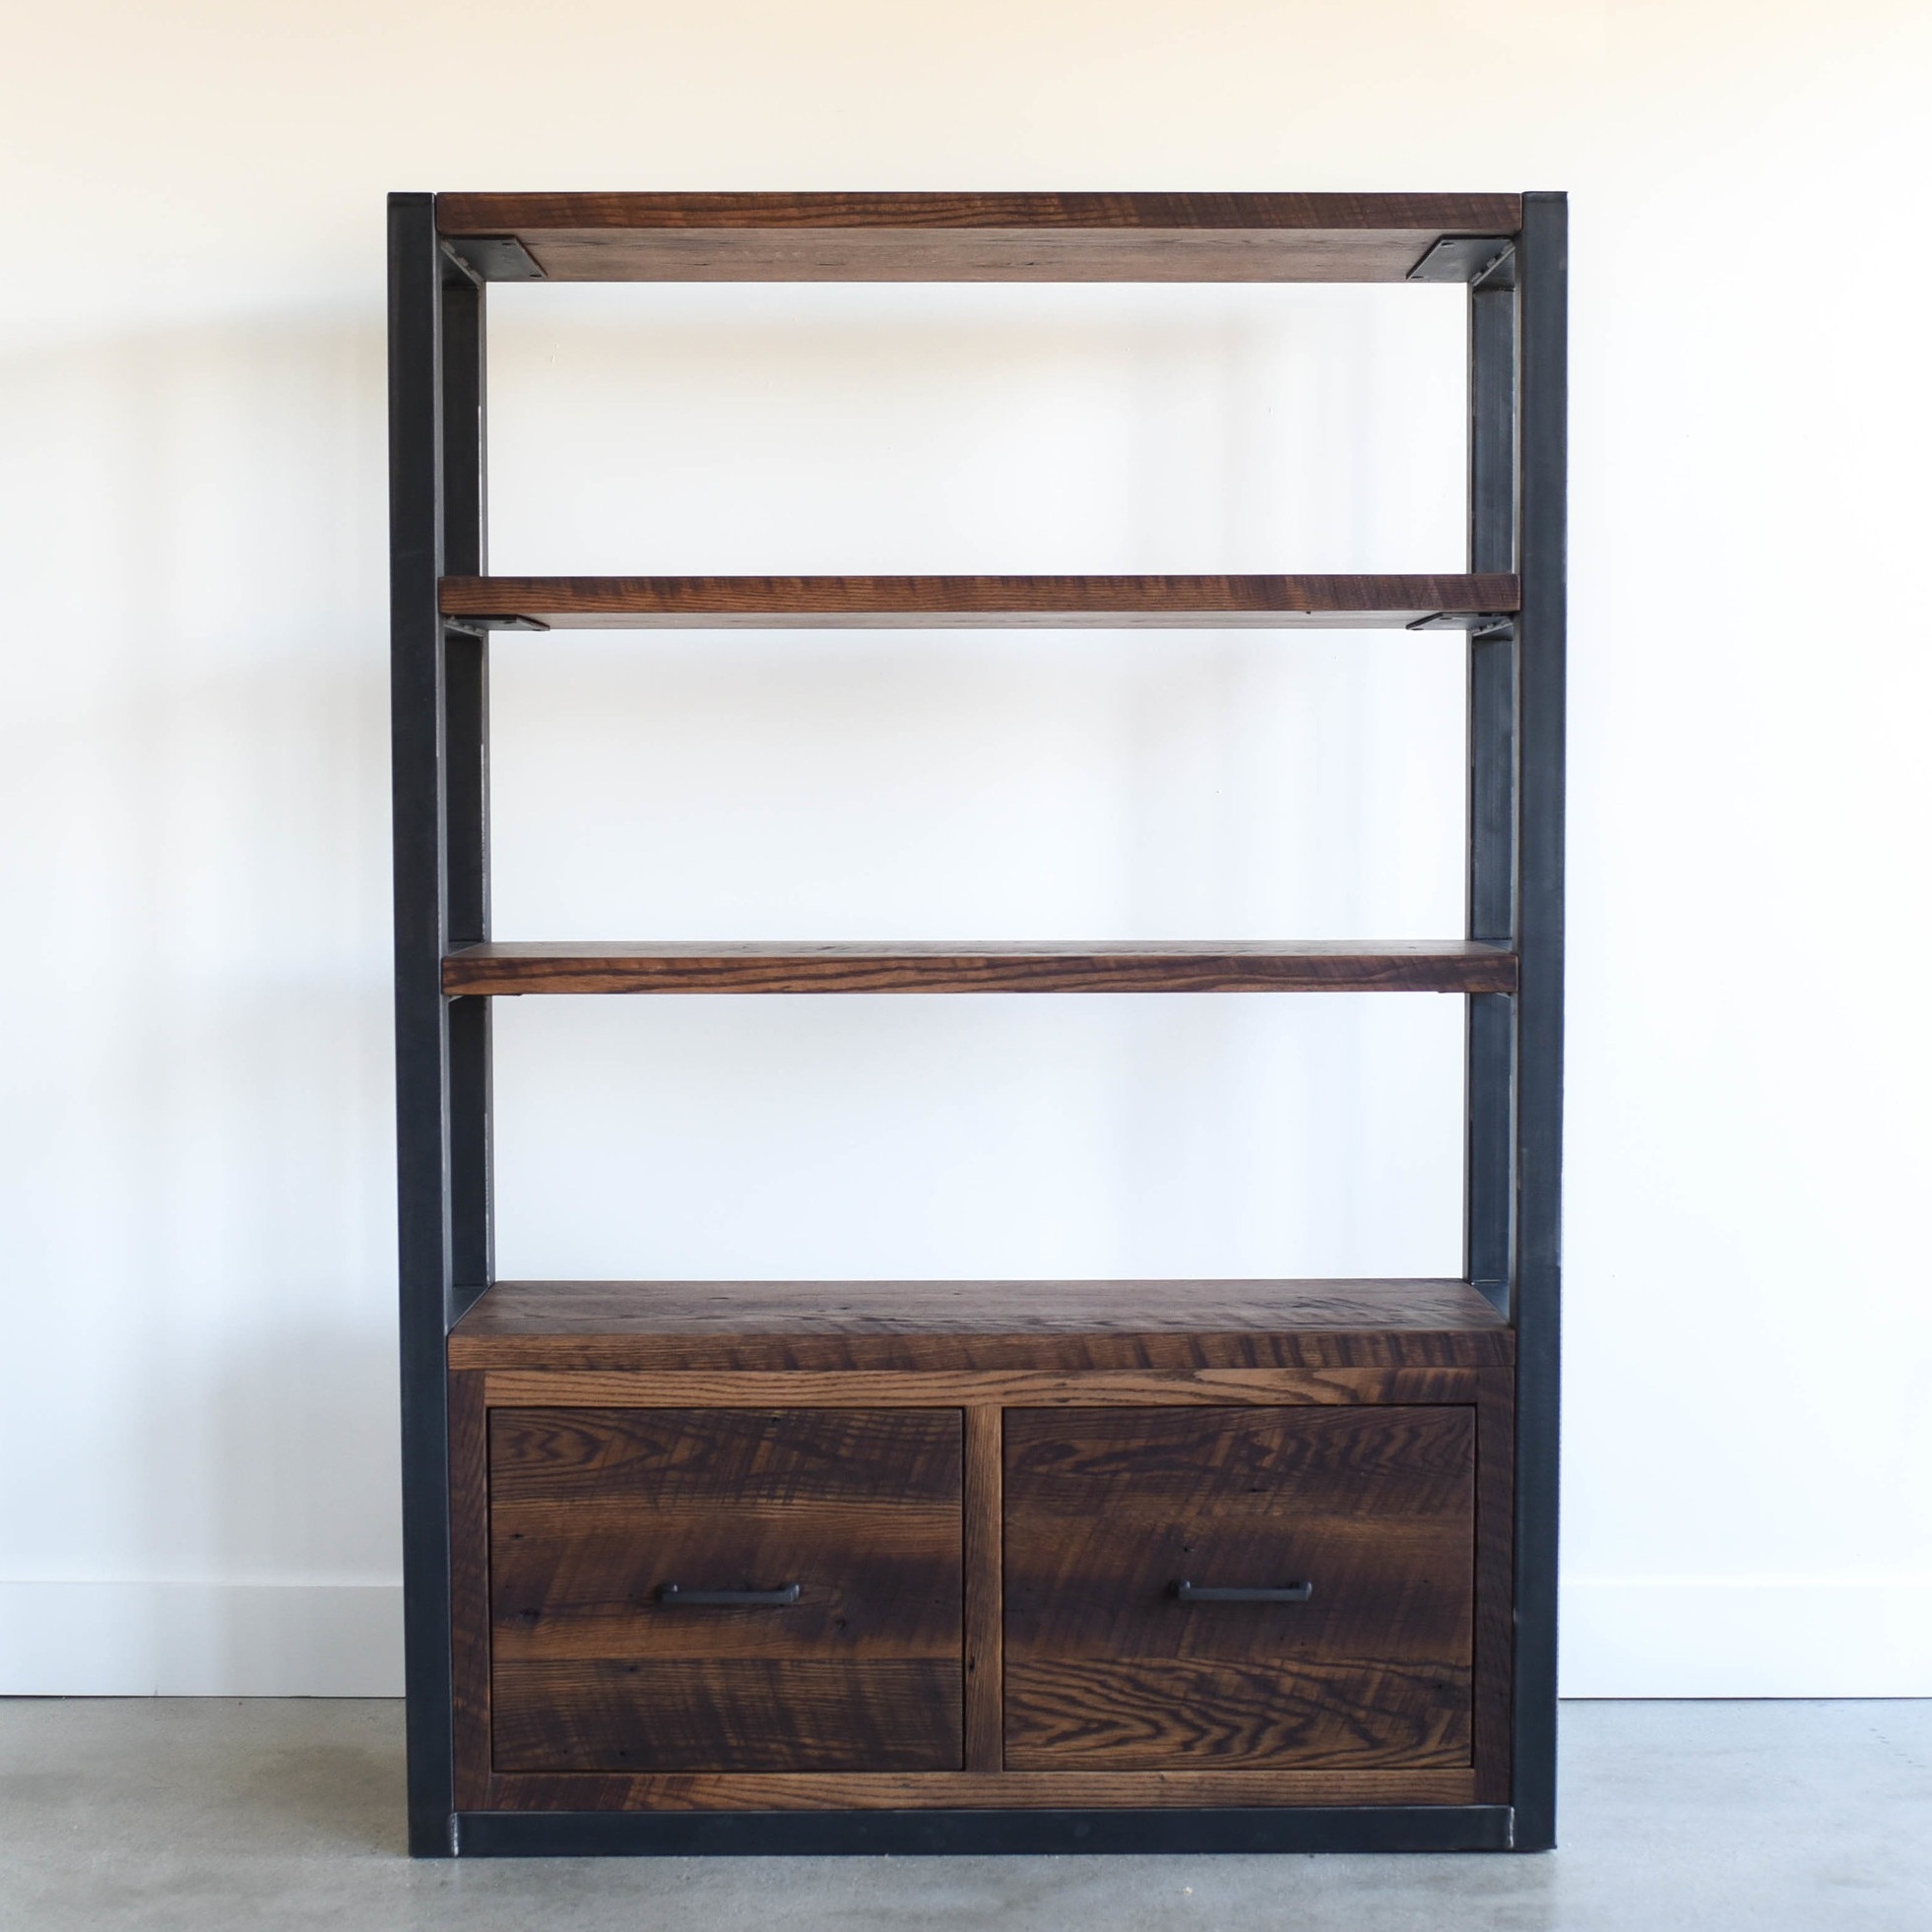 Industrial Reclaimed Wood Bookshelf Two Drawers What We Make